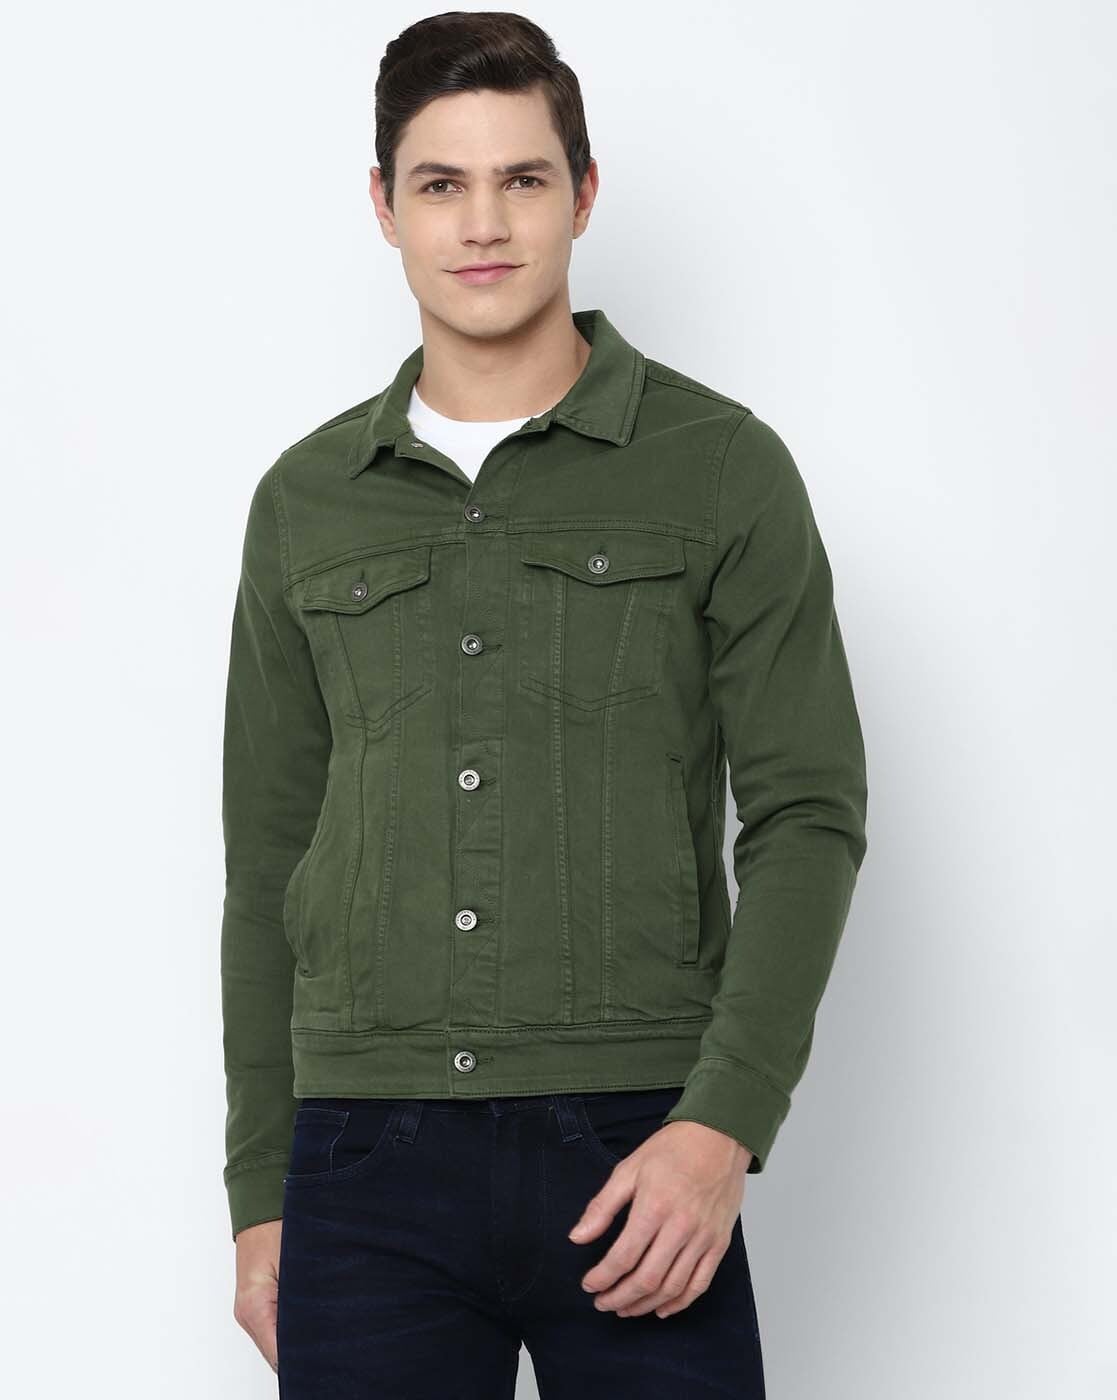 Buy Allen Solly Men Green Print Full Sleeves Casual Jacket online